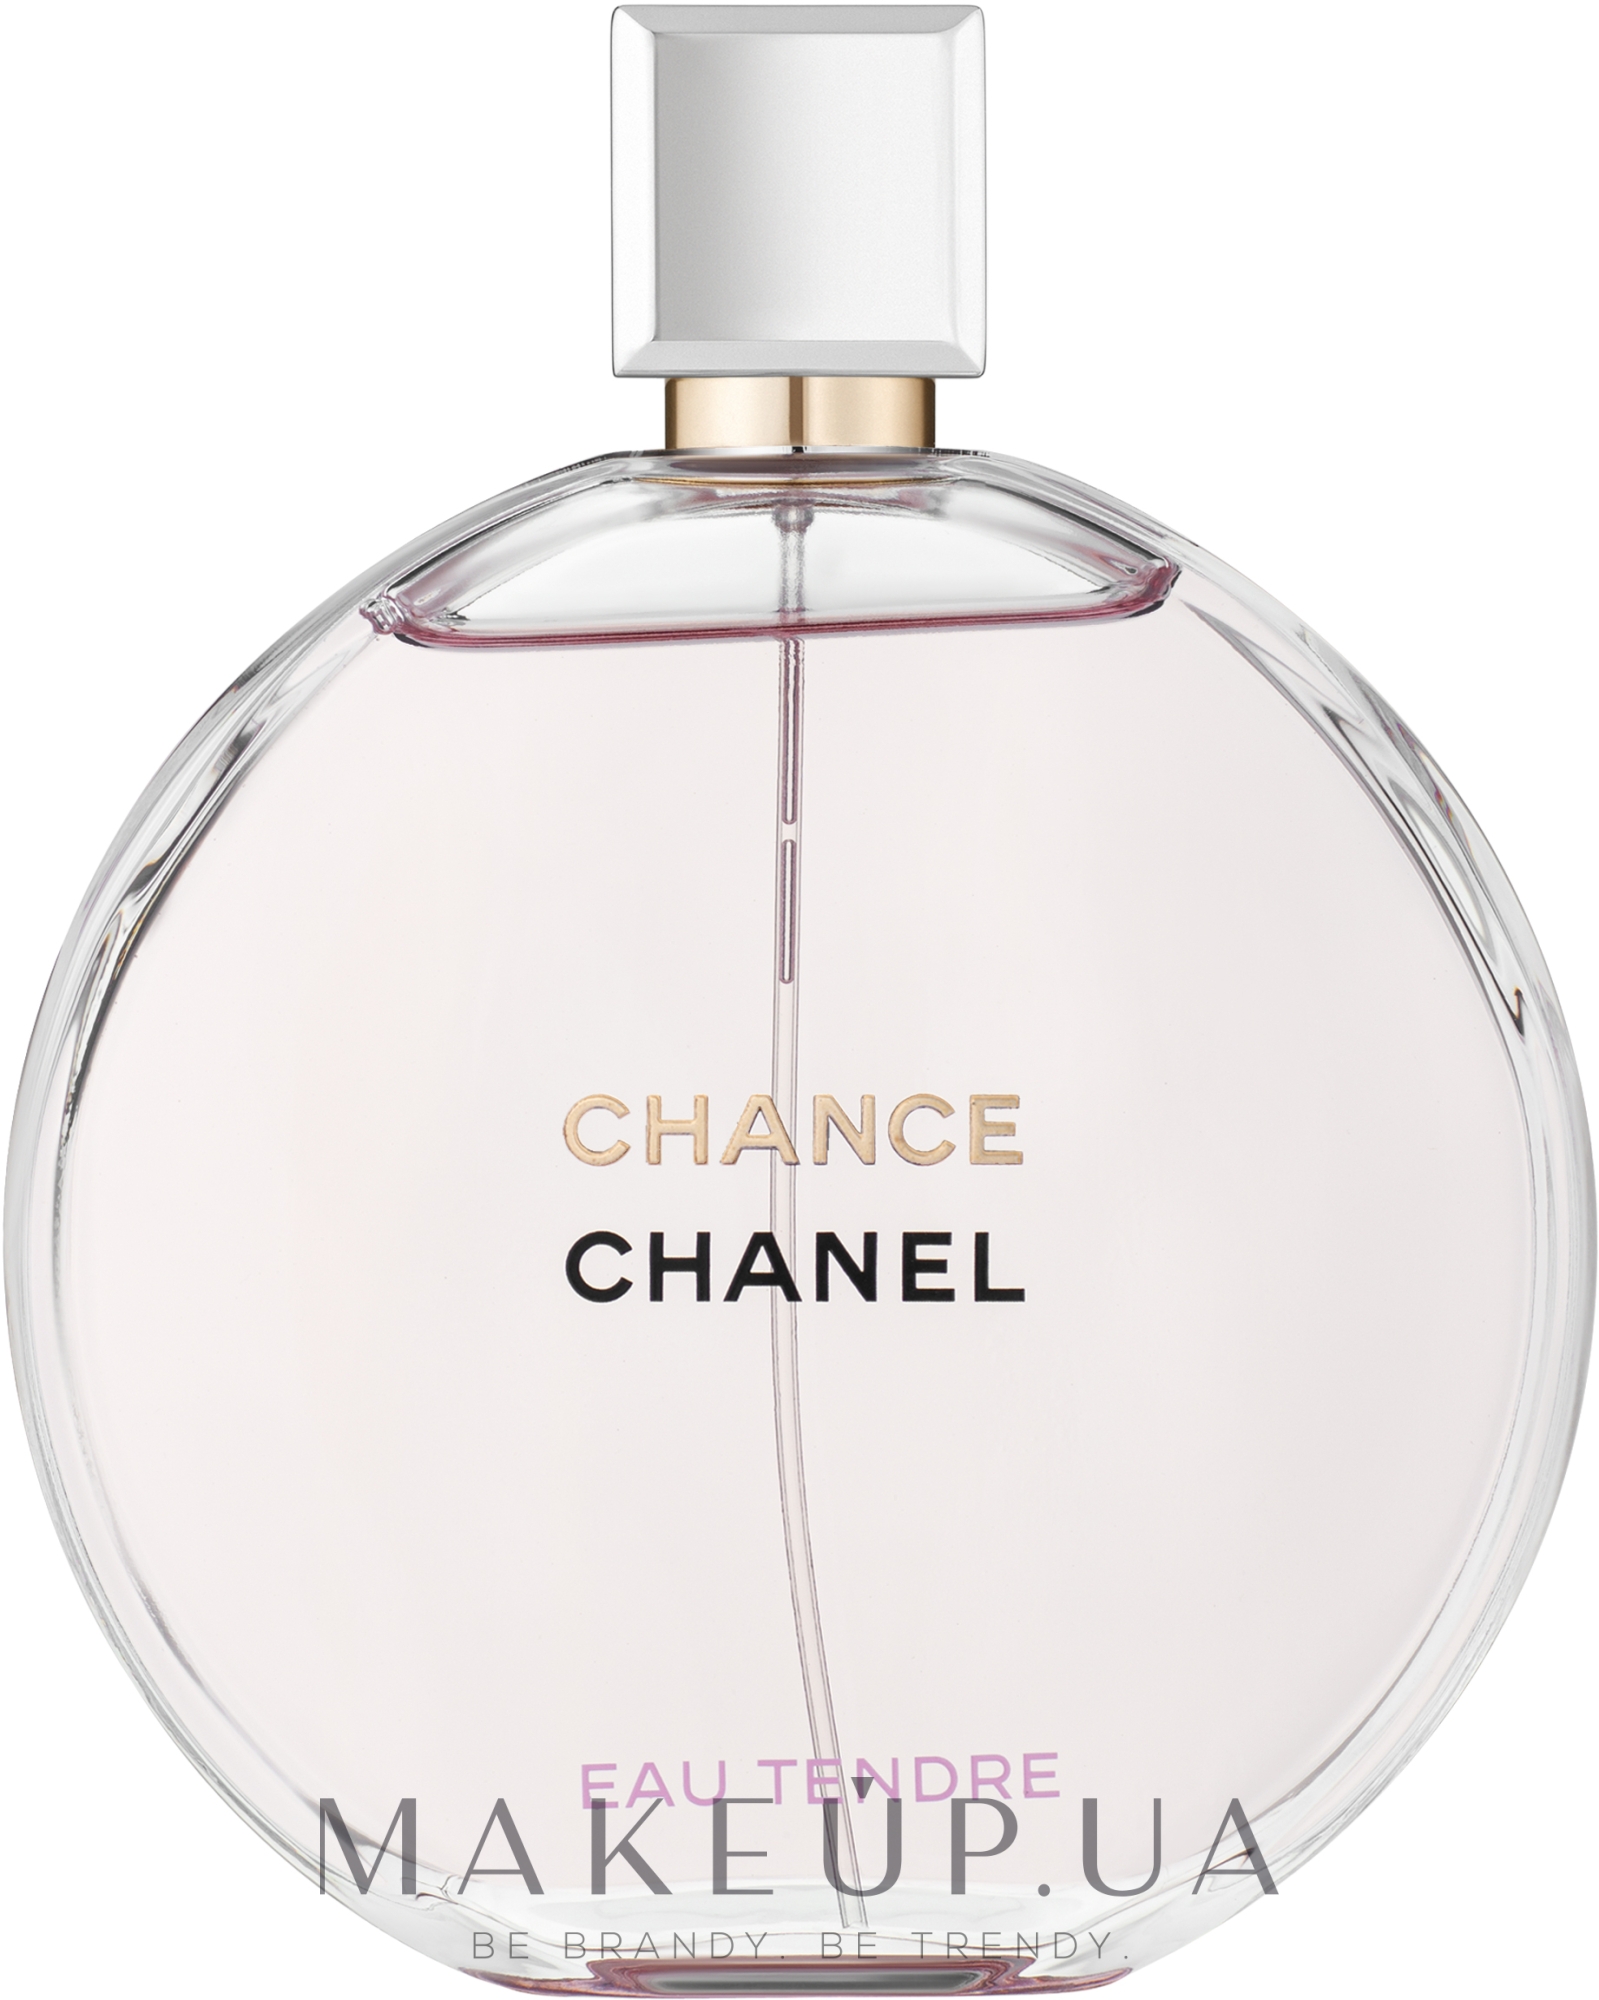 Chanel chance eau tendre  отзывы покупателей  парфюмерный  интернетмагазин Randewoo